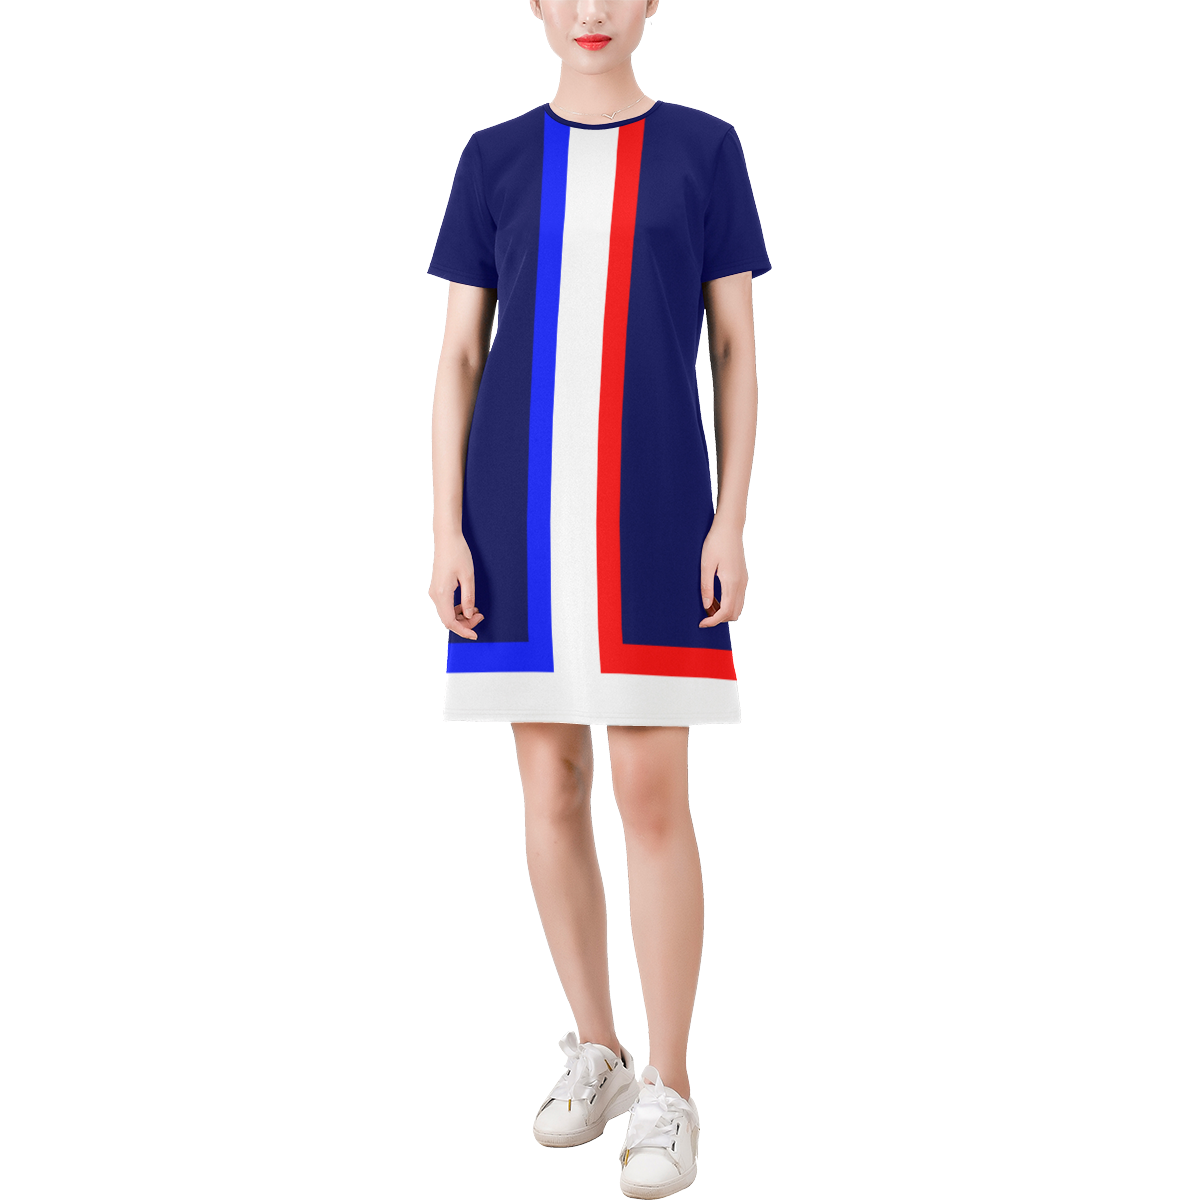 Red, White and Blue Retro Mod by ArtformDesigns Short-Sleeve Round Neck A-Line Dress (Model D47)